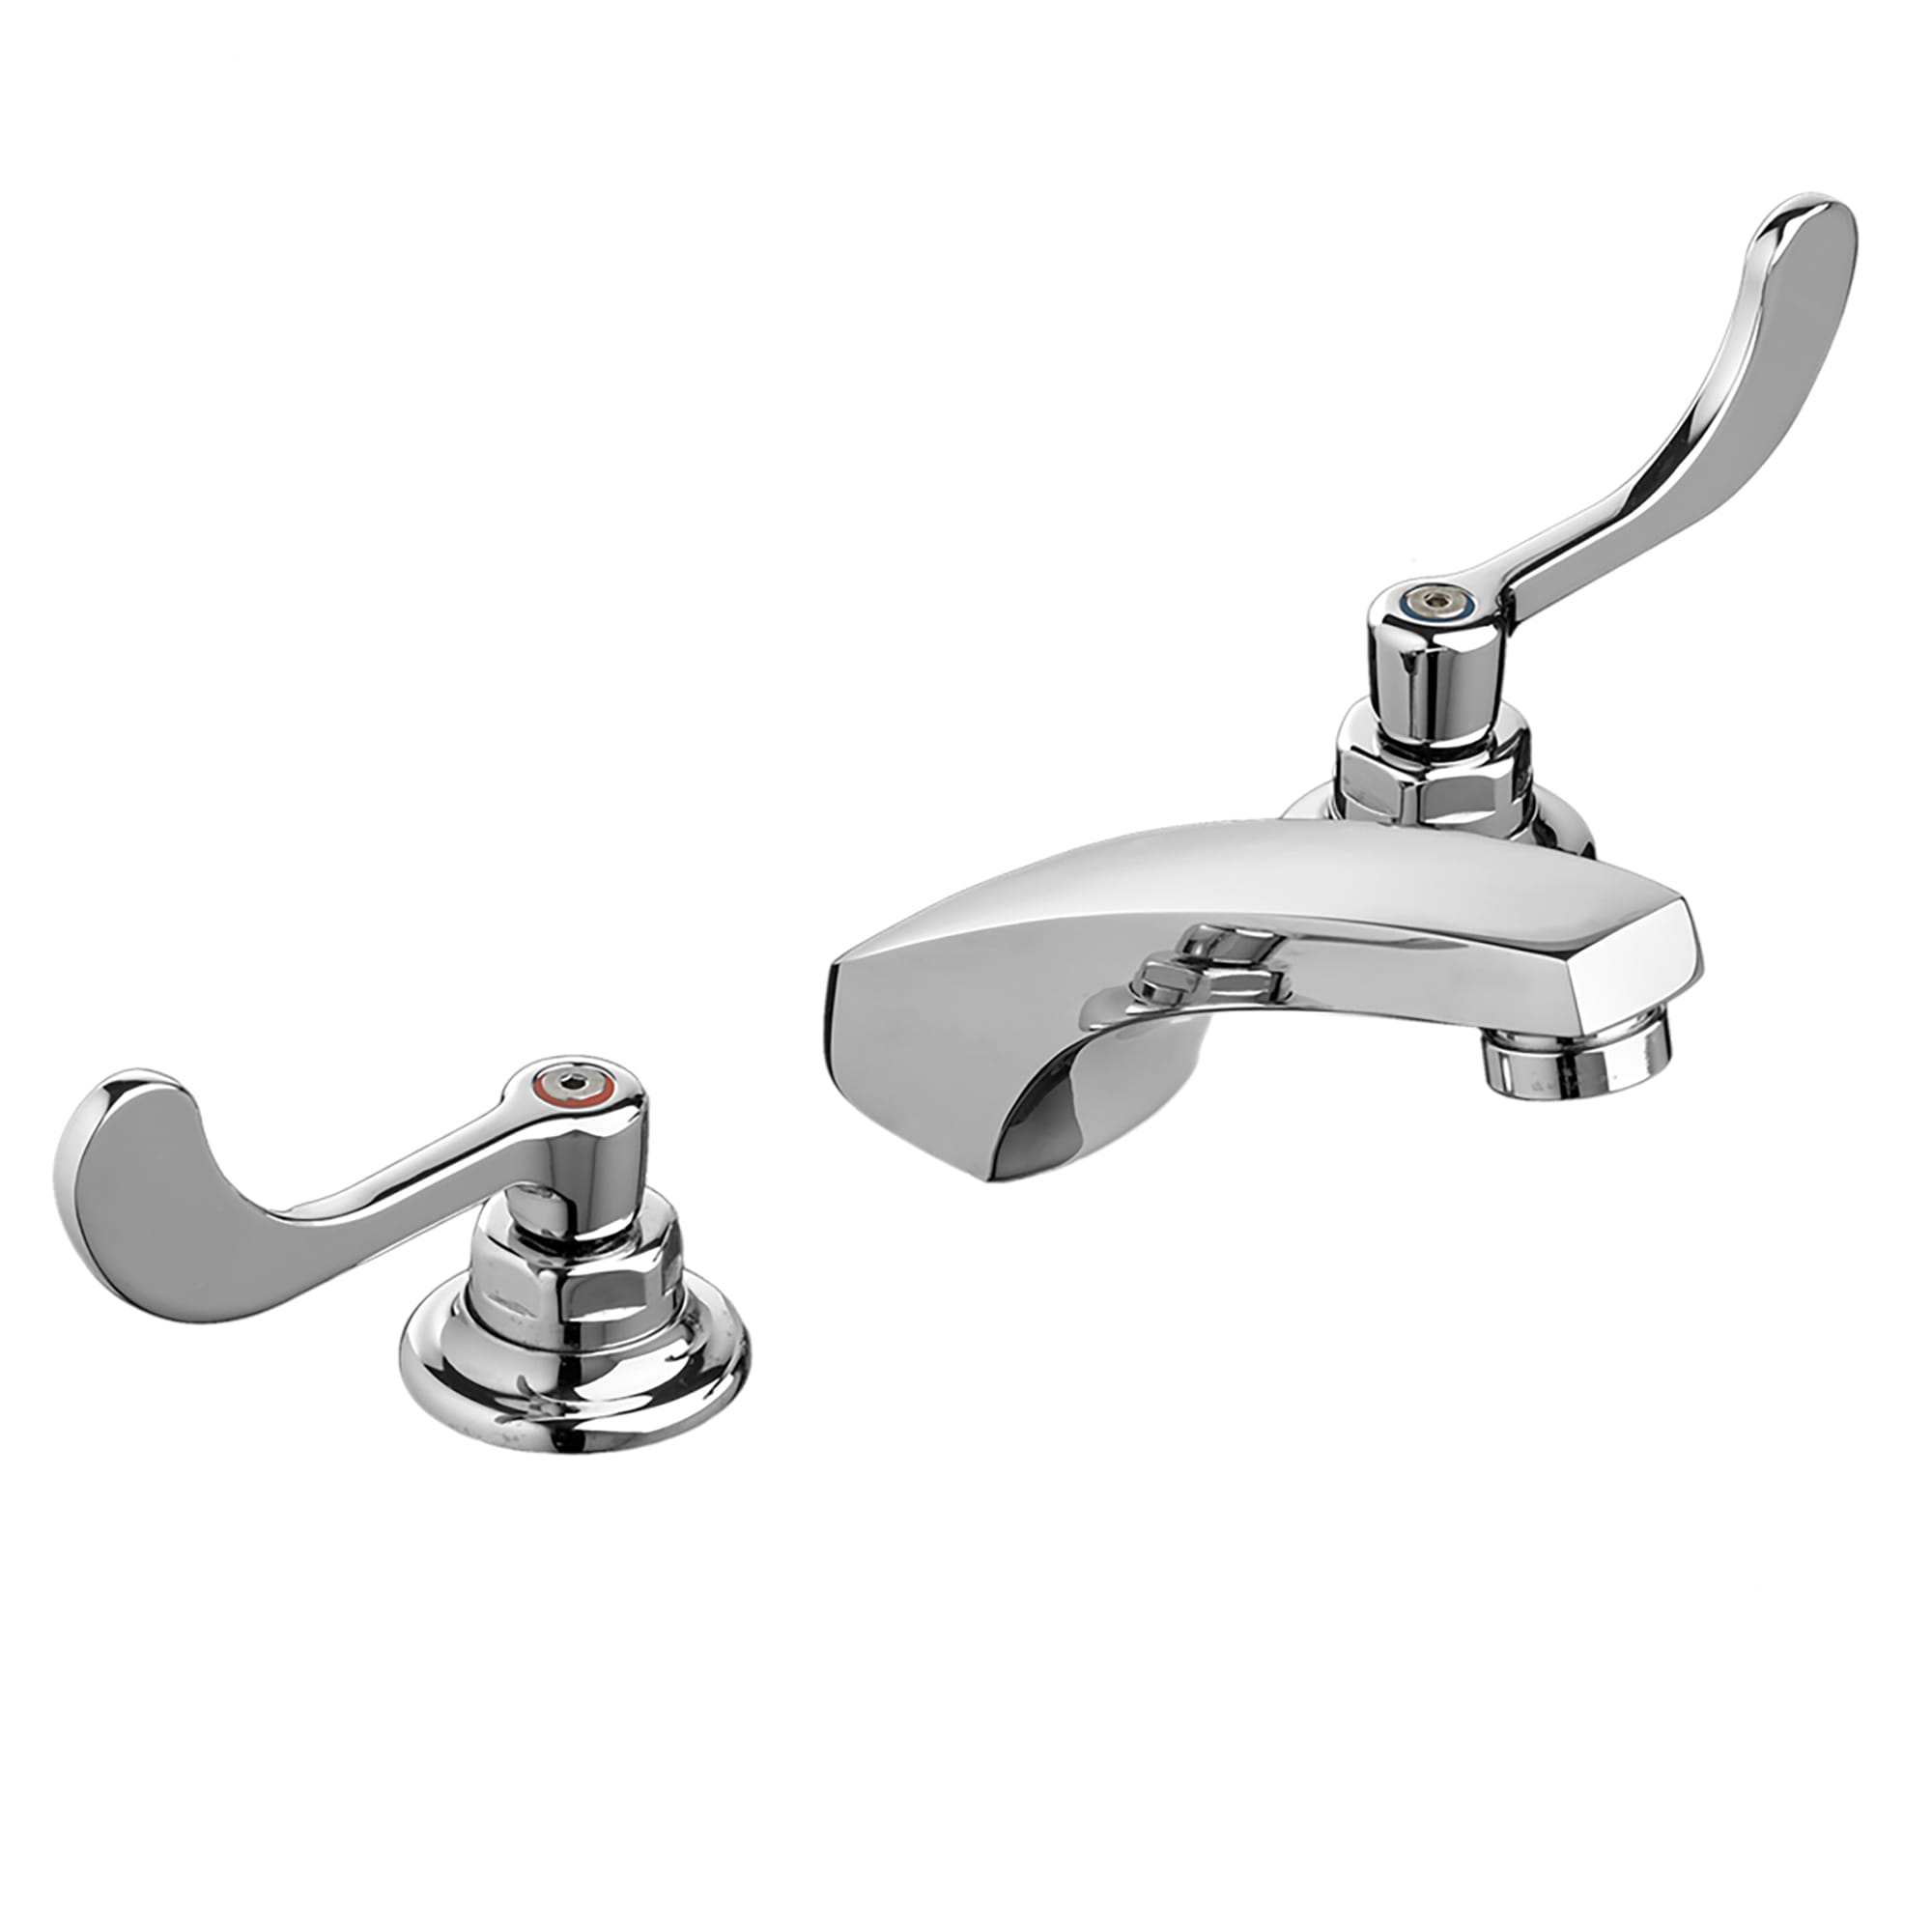 Monterrey® 8-Inch Widespread Cast Faucet With Wrist Blade Handles 1.5 gpm/5.7 Lpm